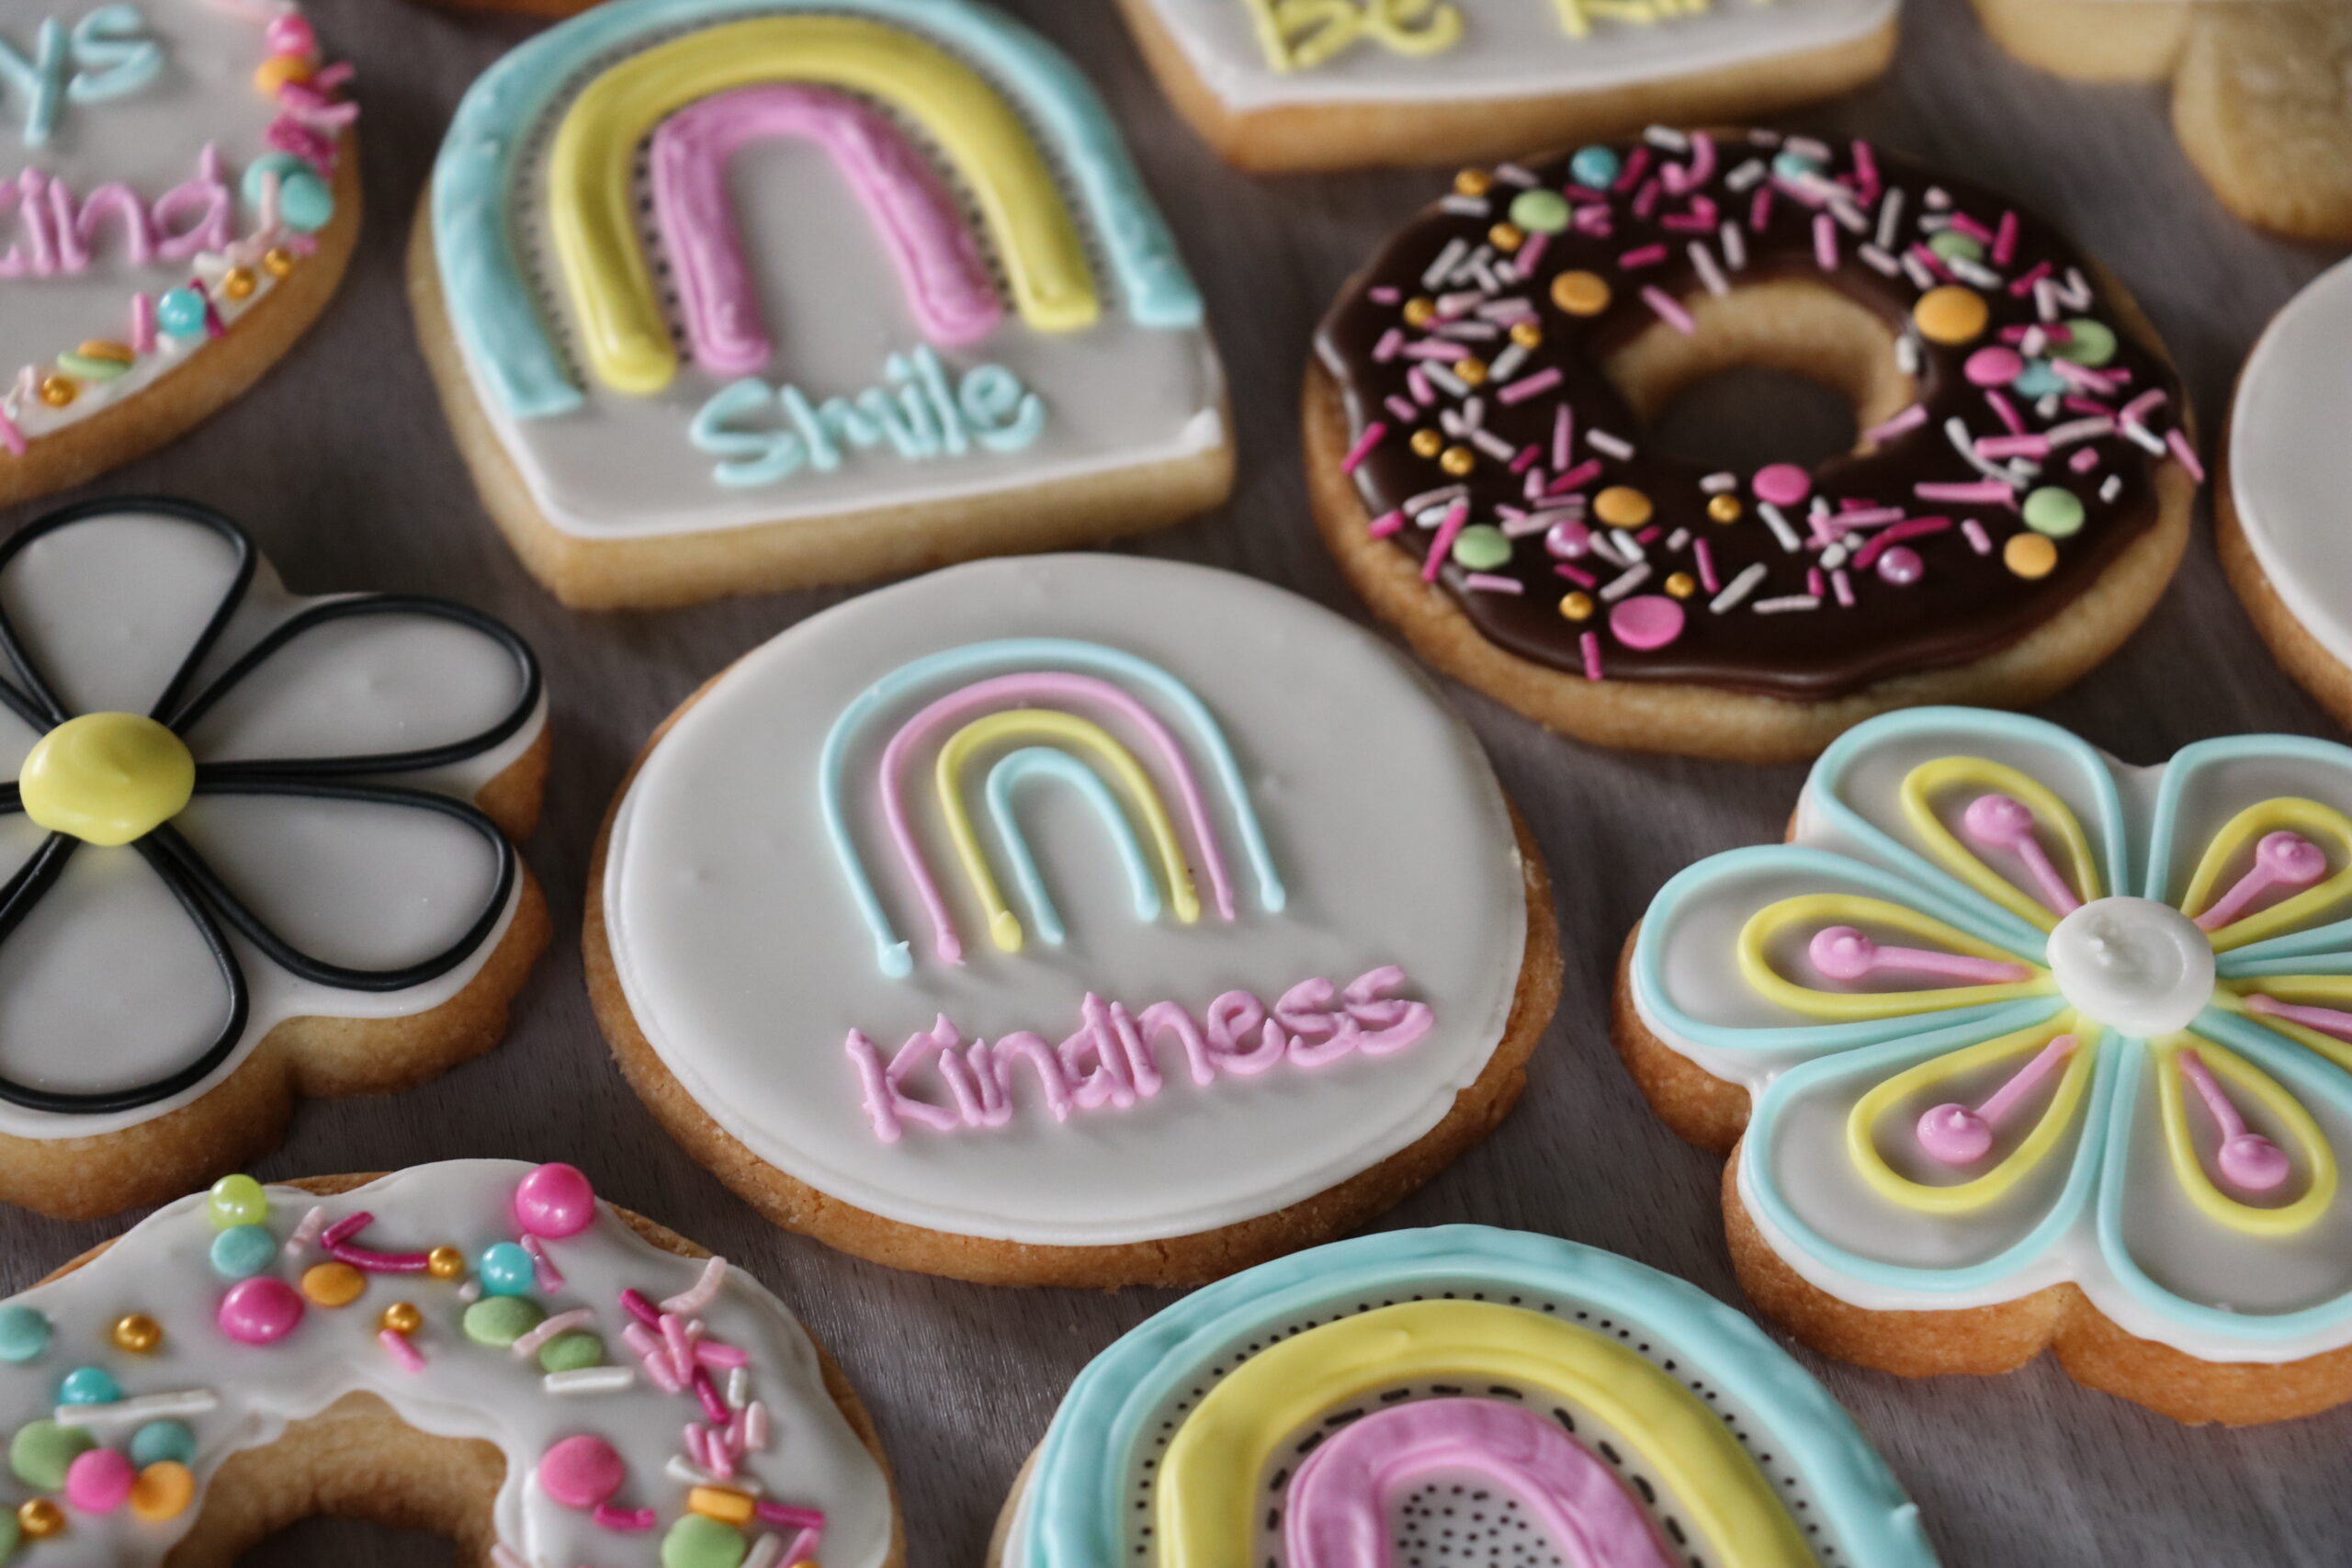 Smile & Kindness Cookies